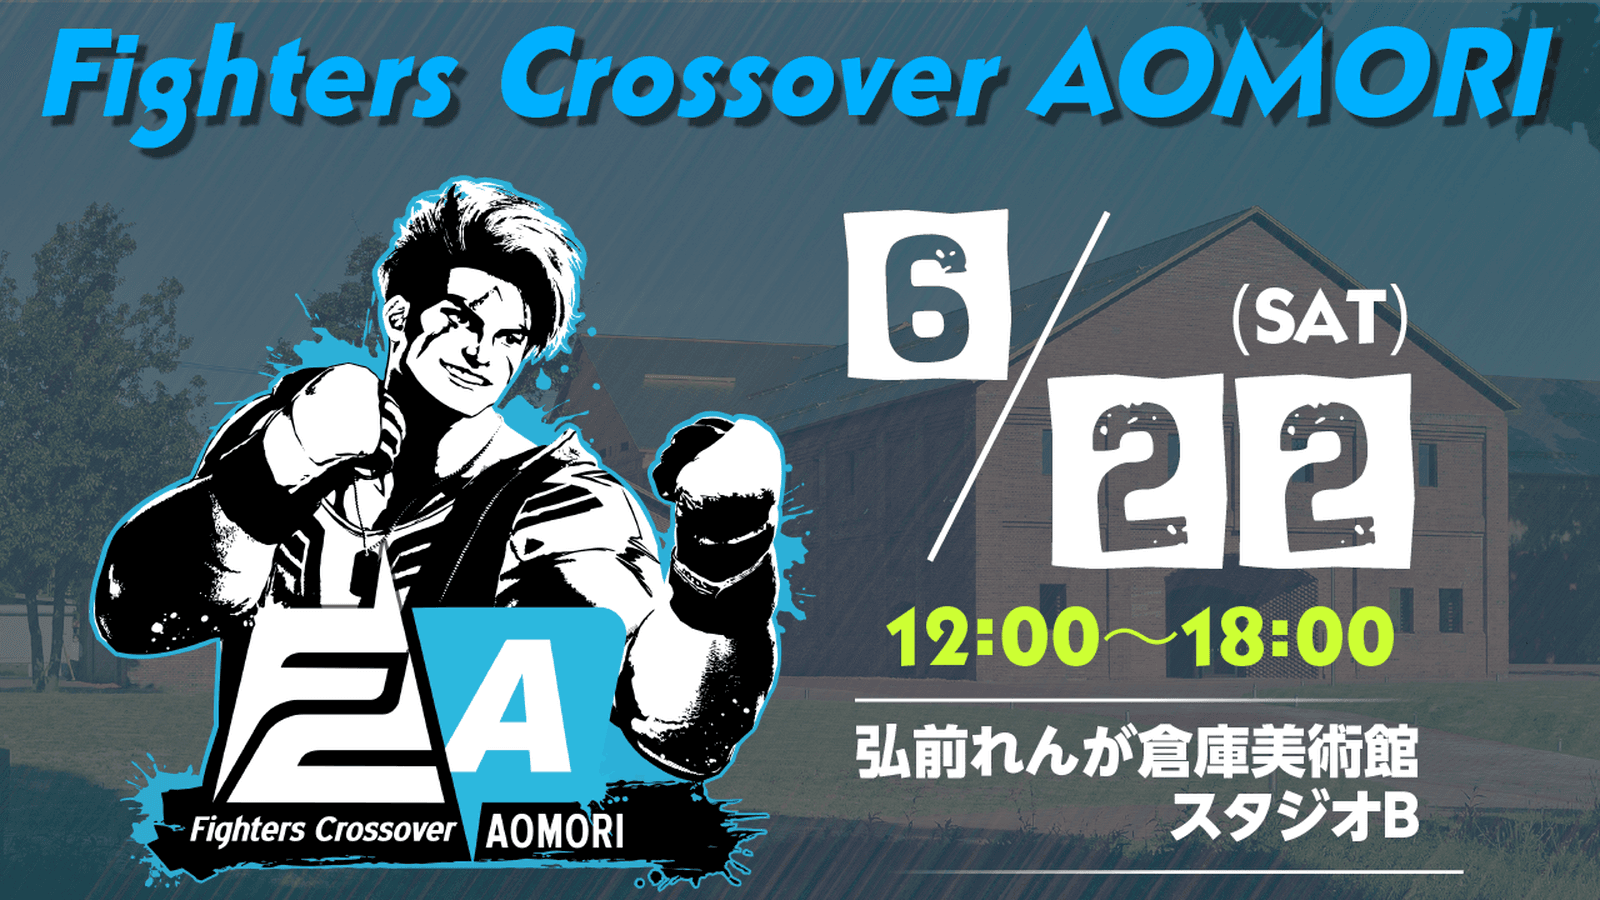 Fighters Crossover AOMORI #1 feature image